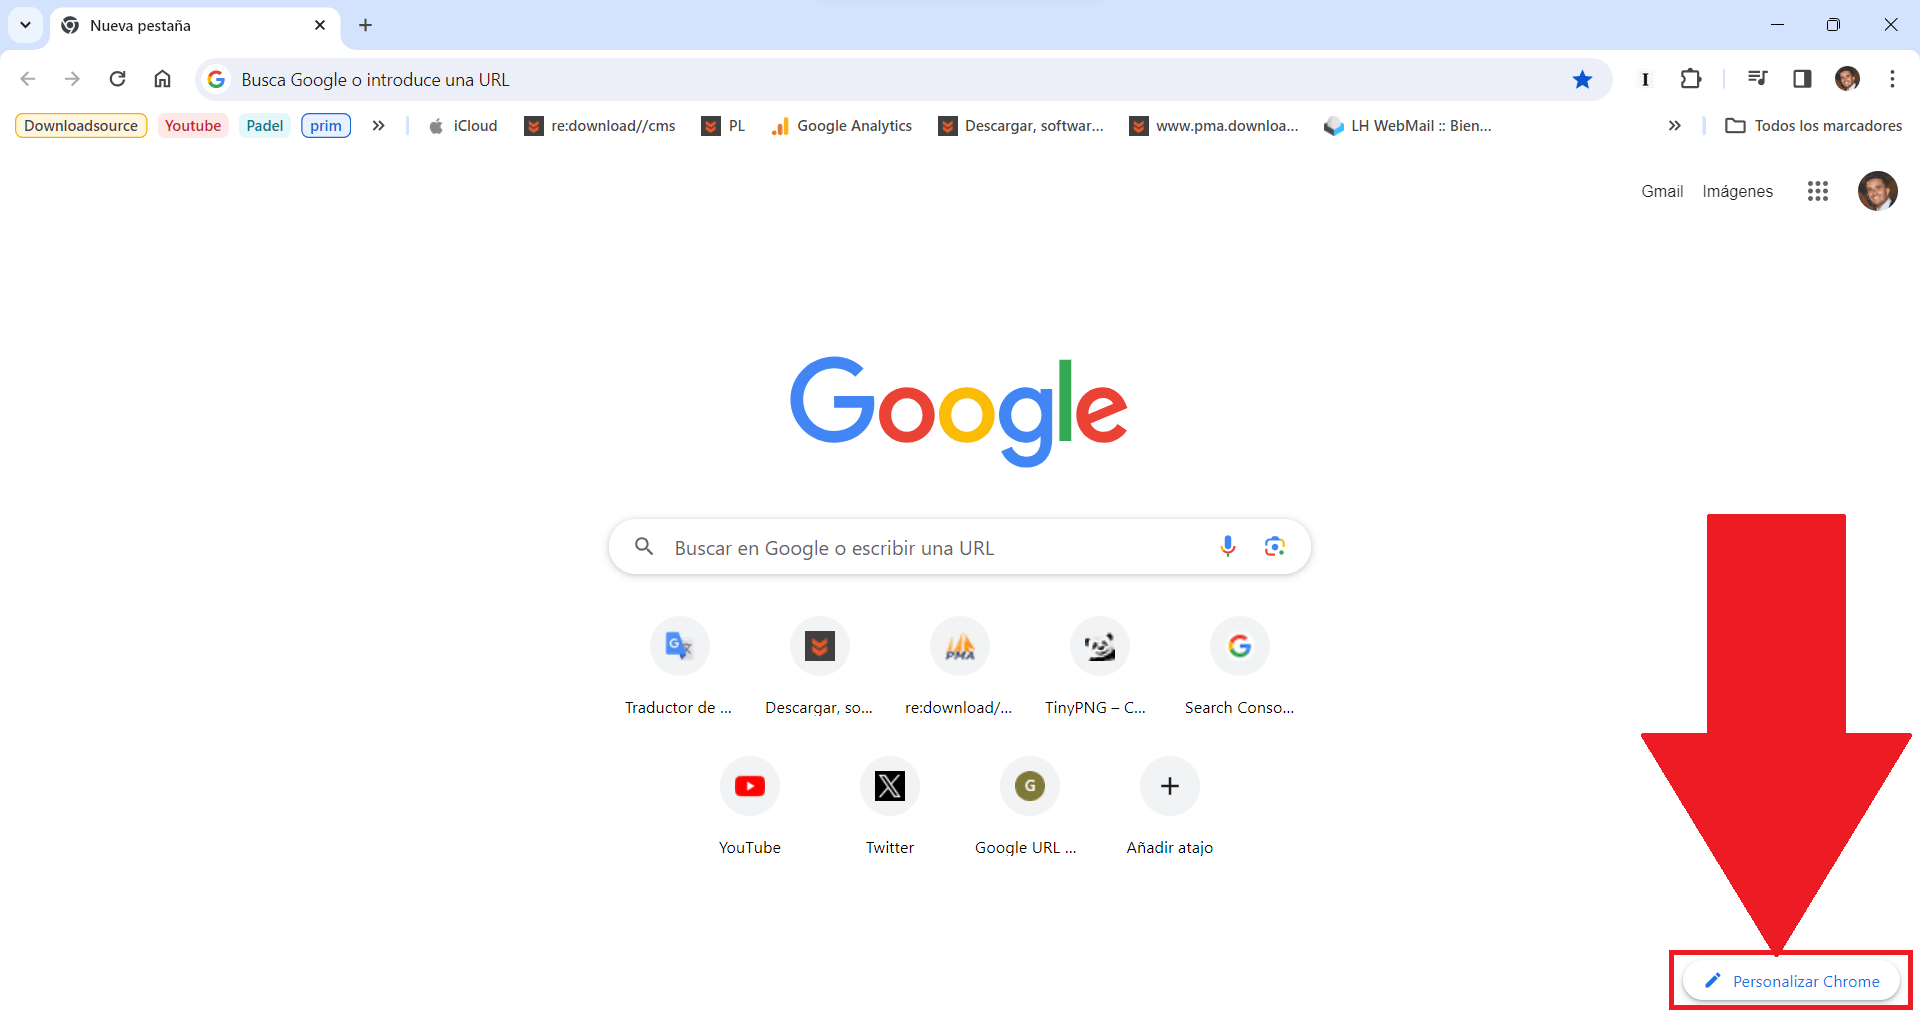 cambiar el color de la ventana de Google Chrome